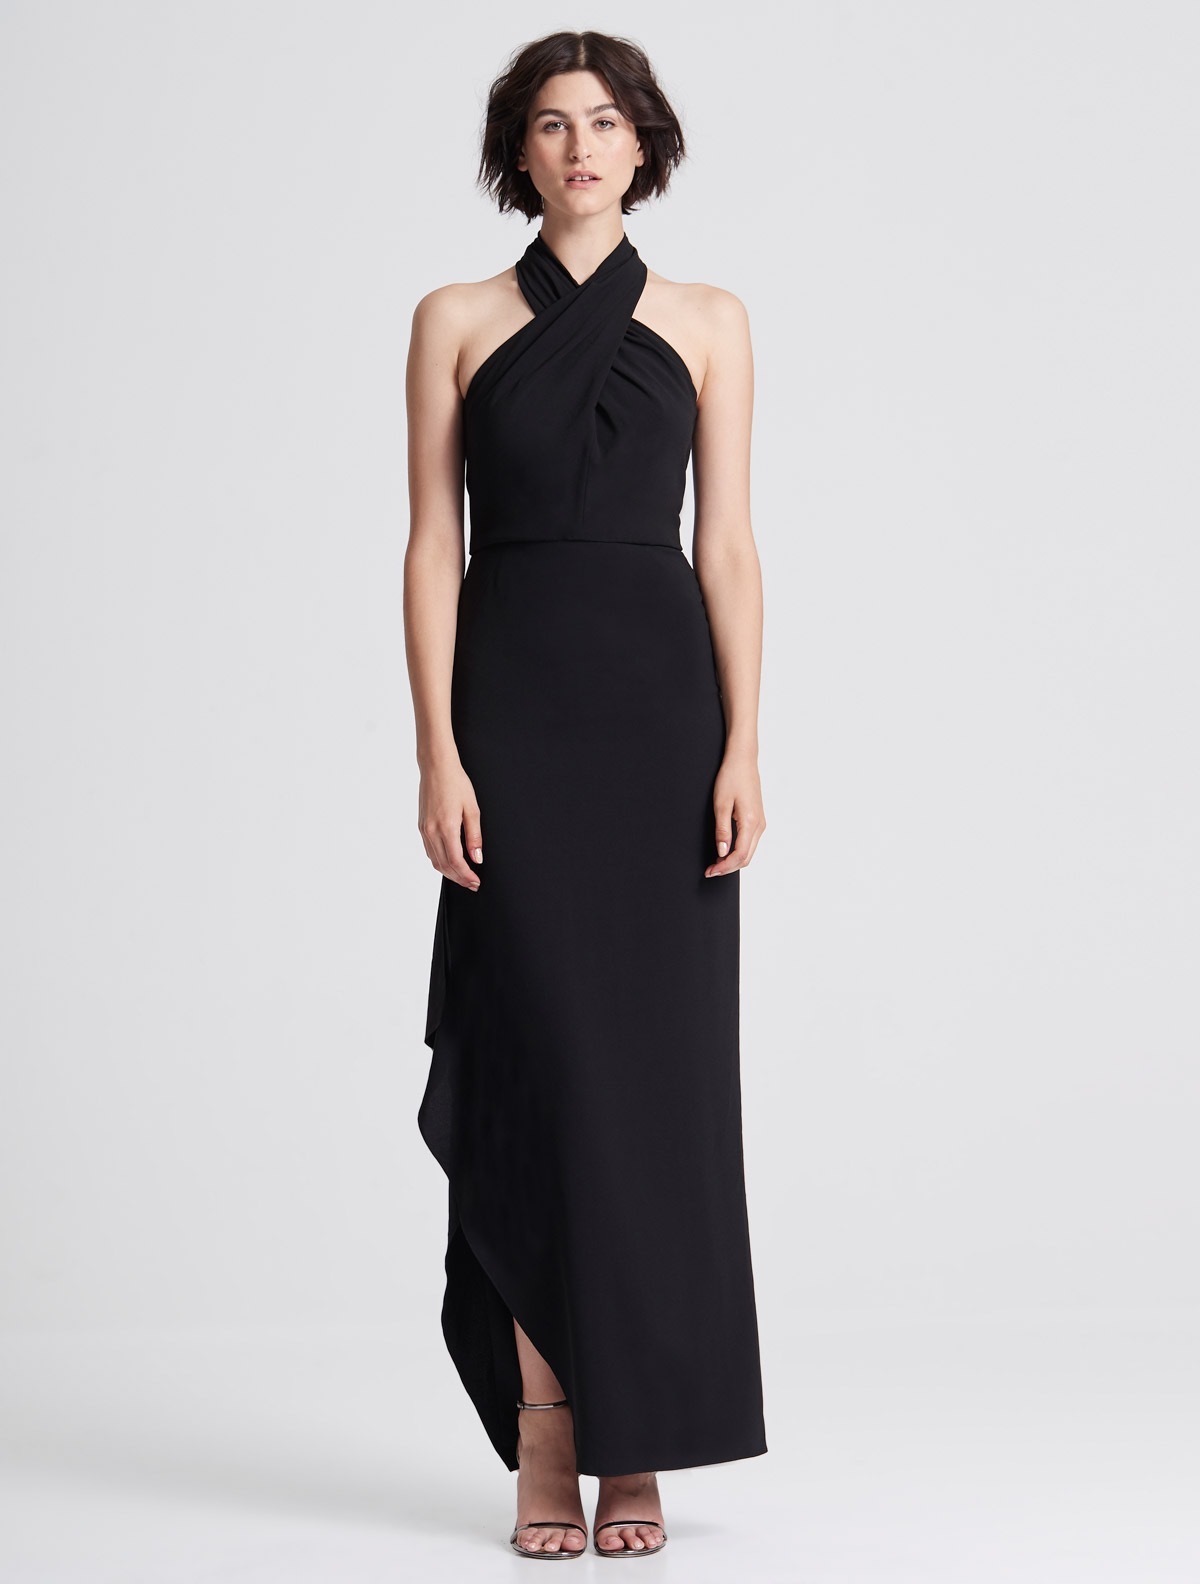 A model wears a stunning cross neck black dress.